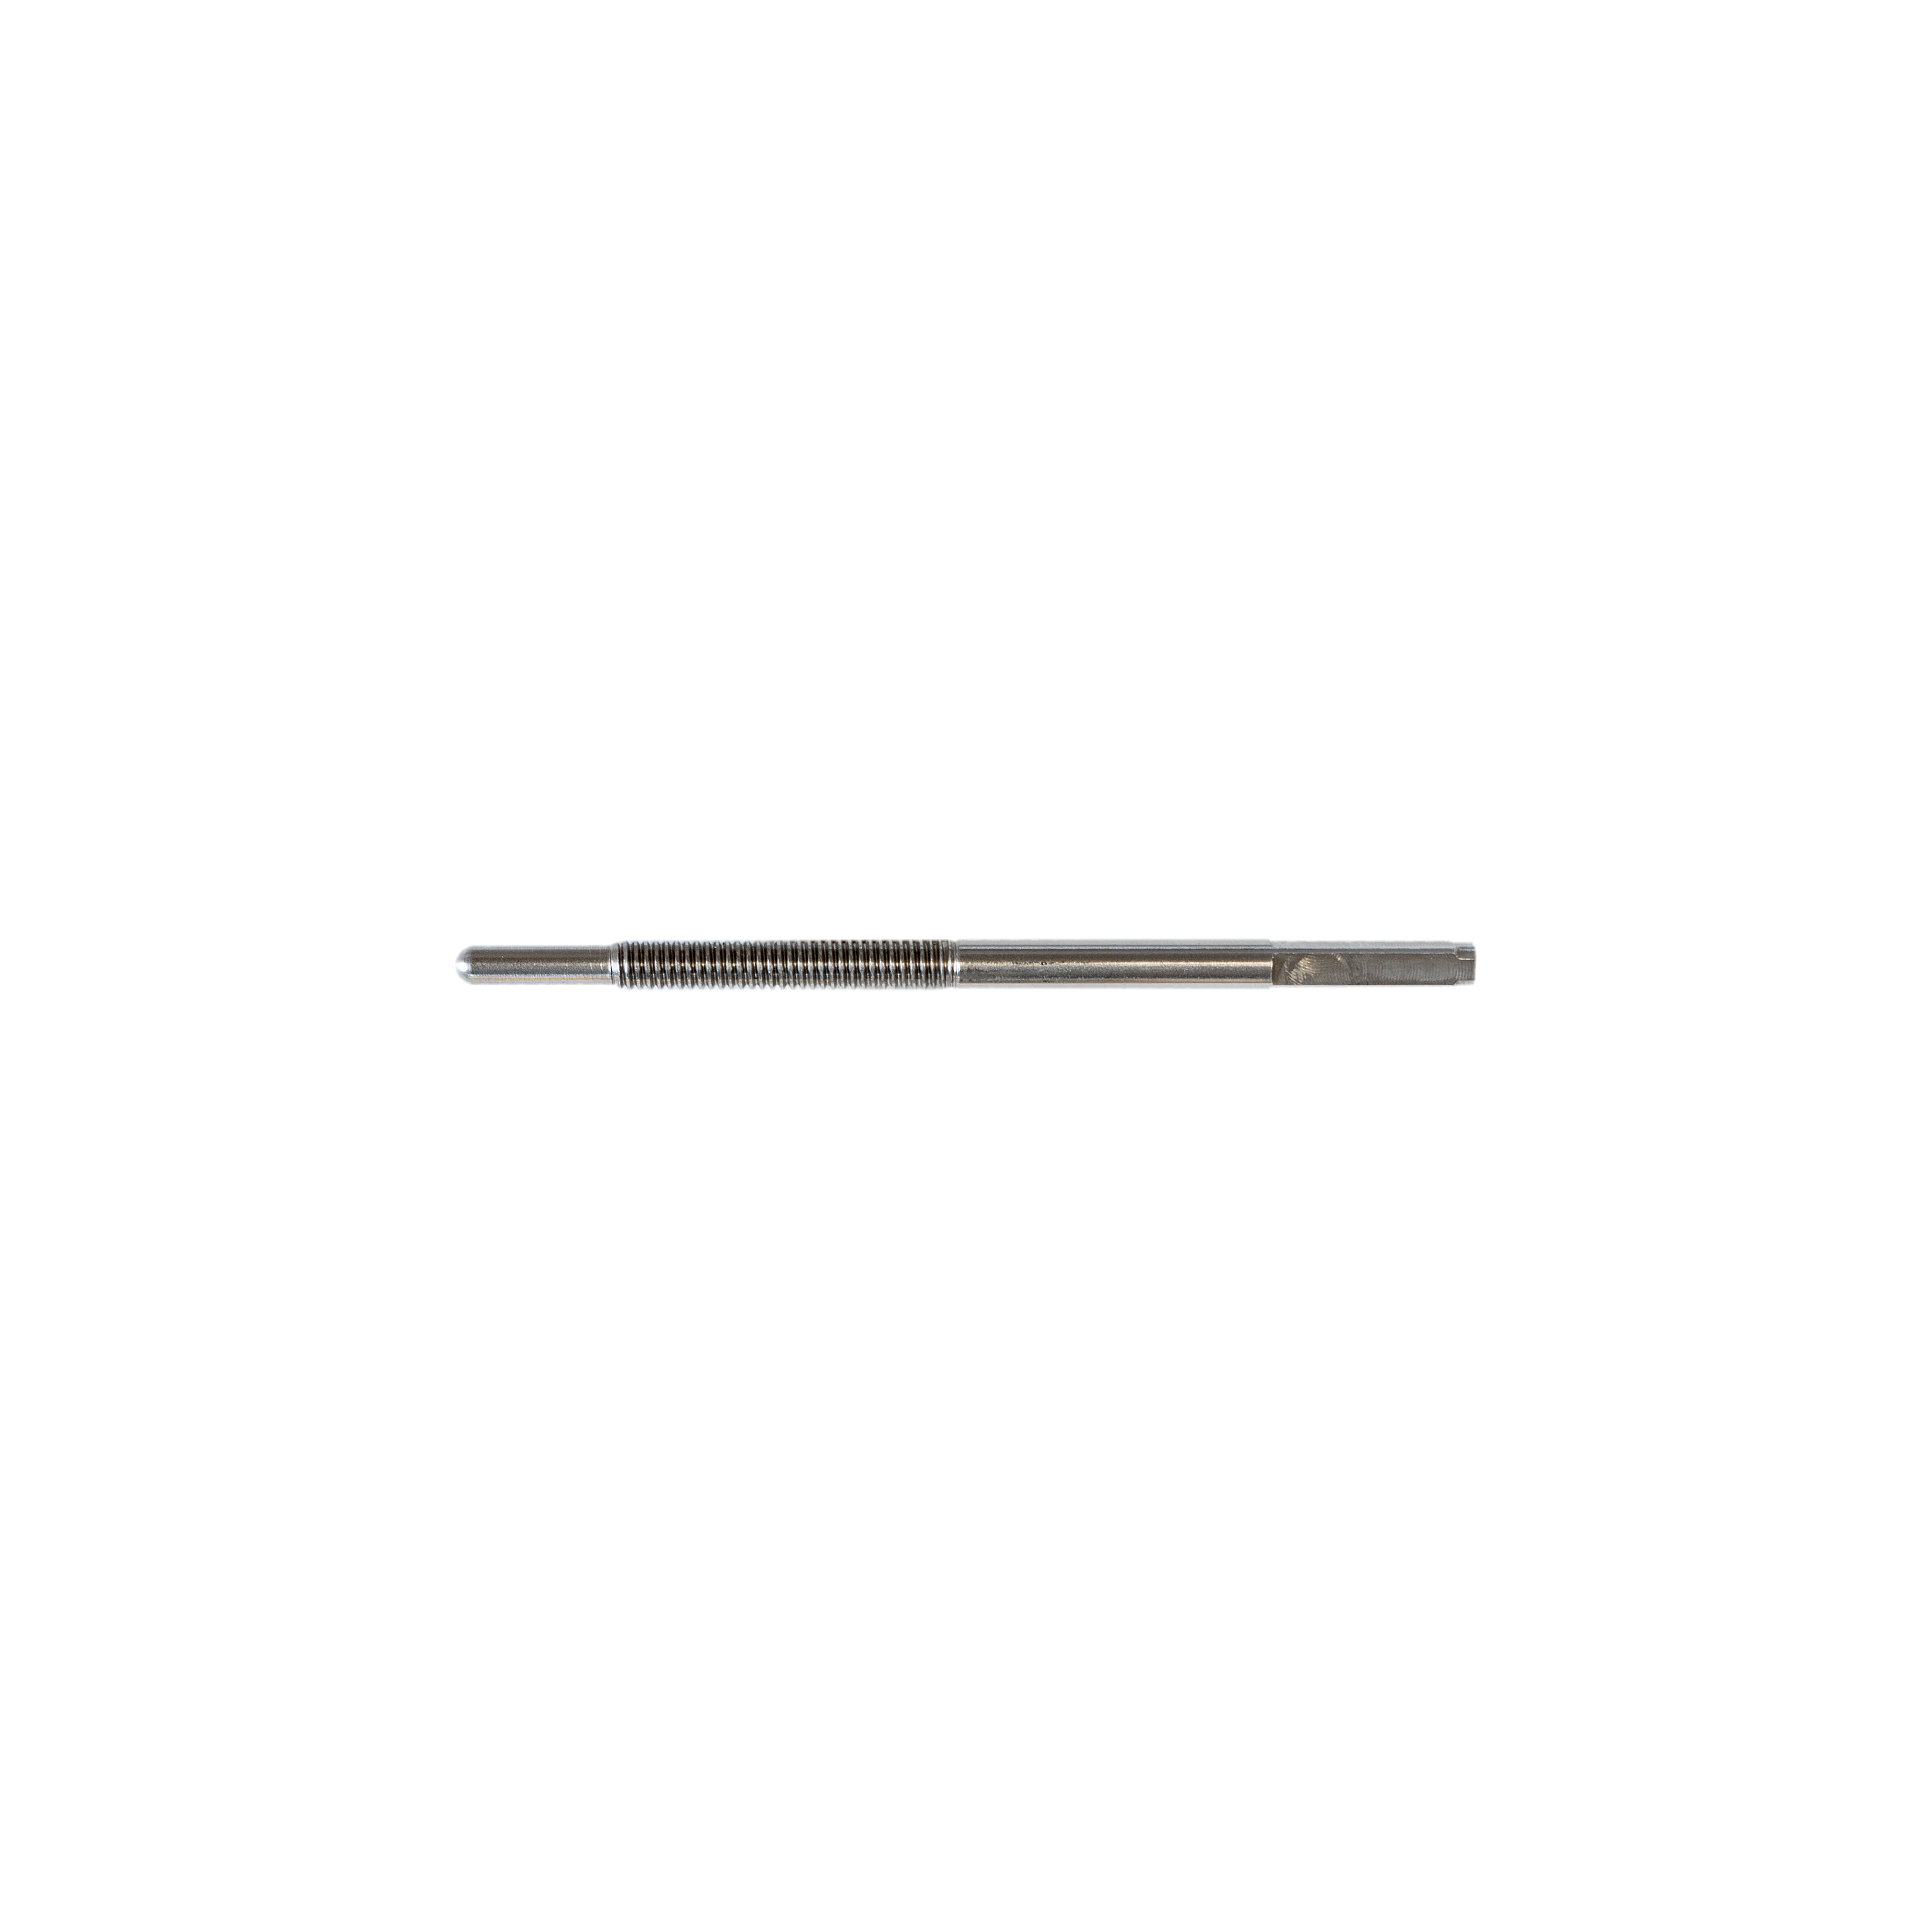 Inch thread 3,3 mm, Cello screws, Stainless steel